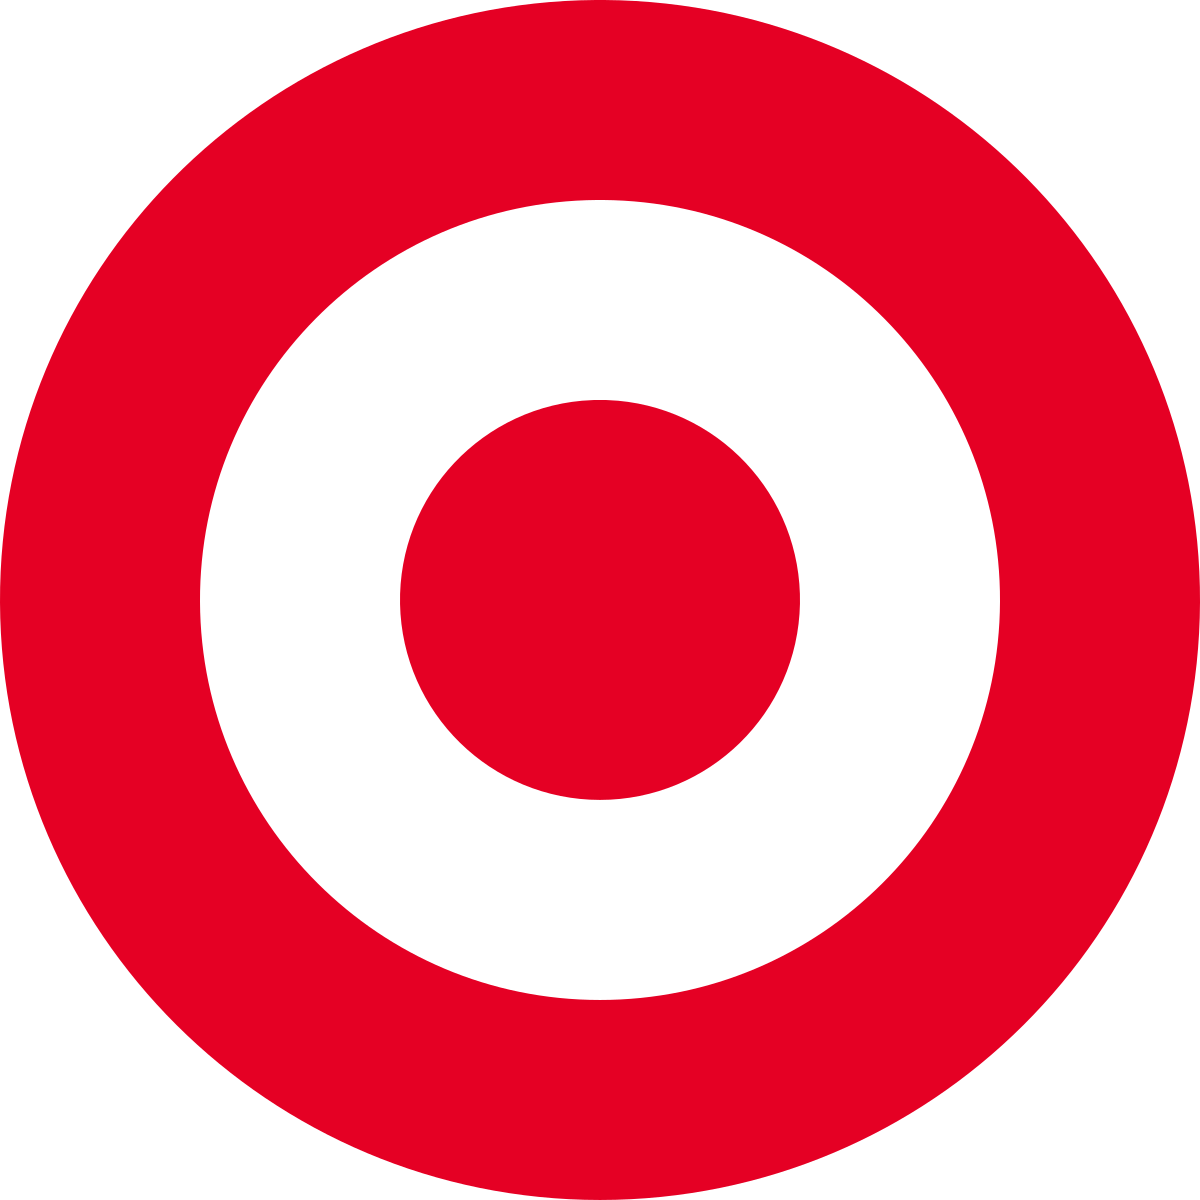 Image Result For Apple Logo Image Result For Target - French Roundel (2000x2000)